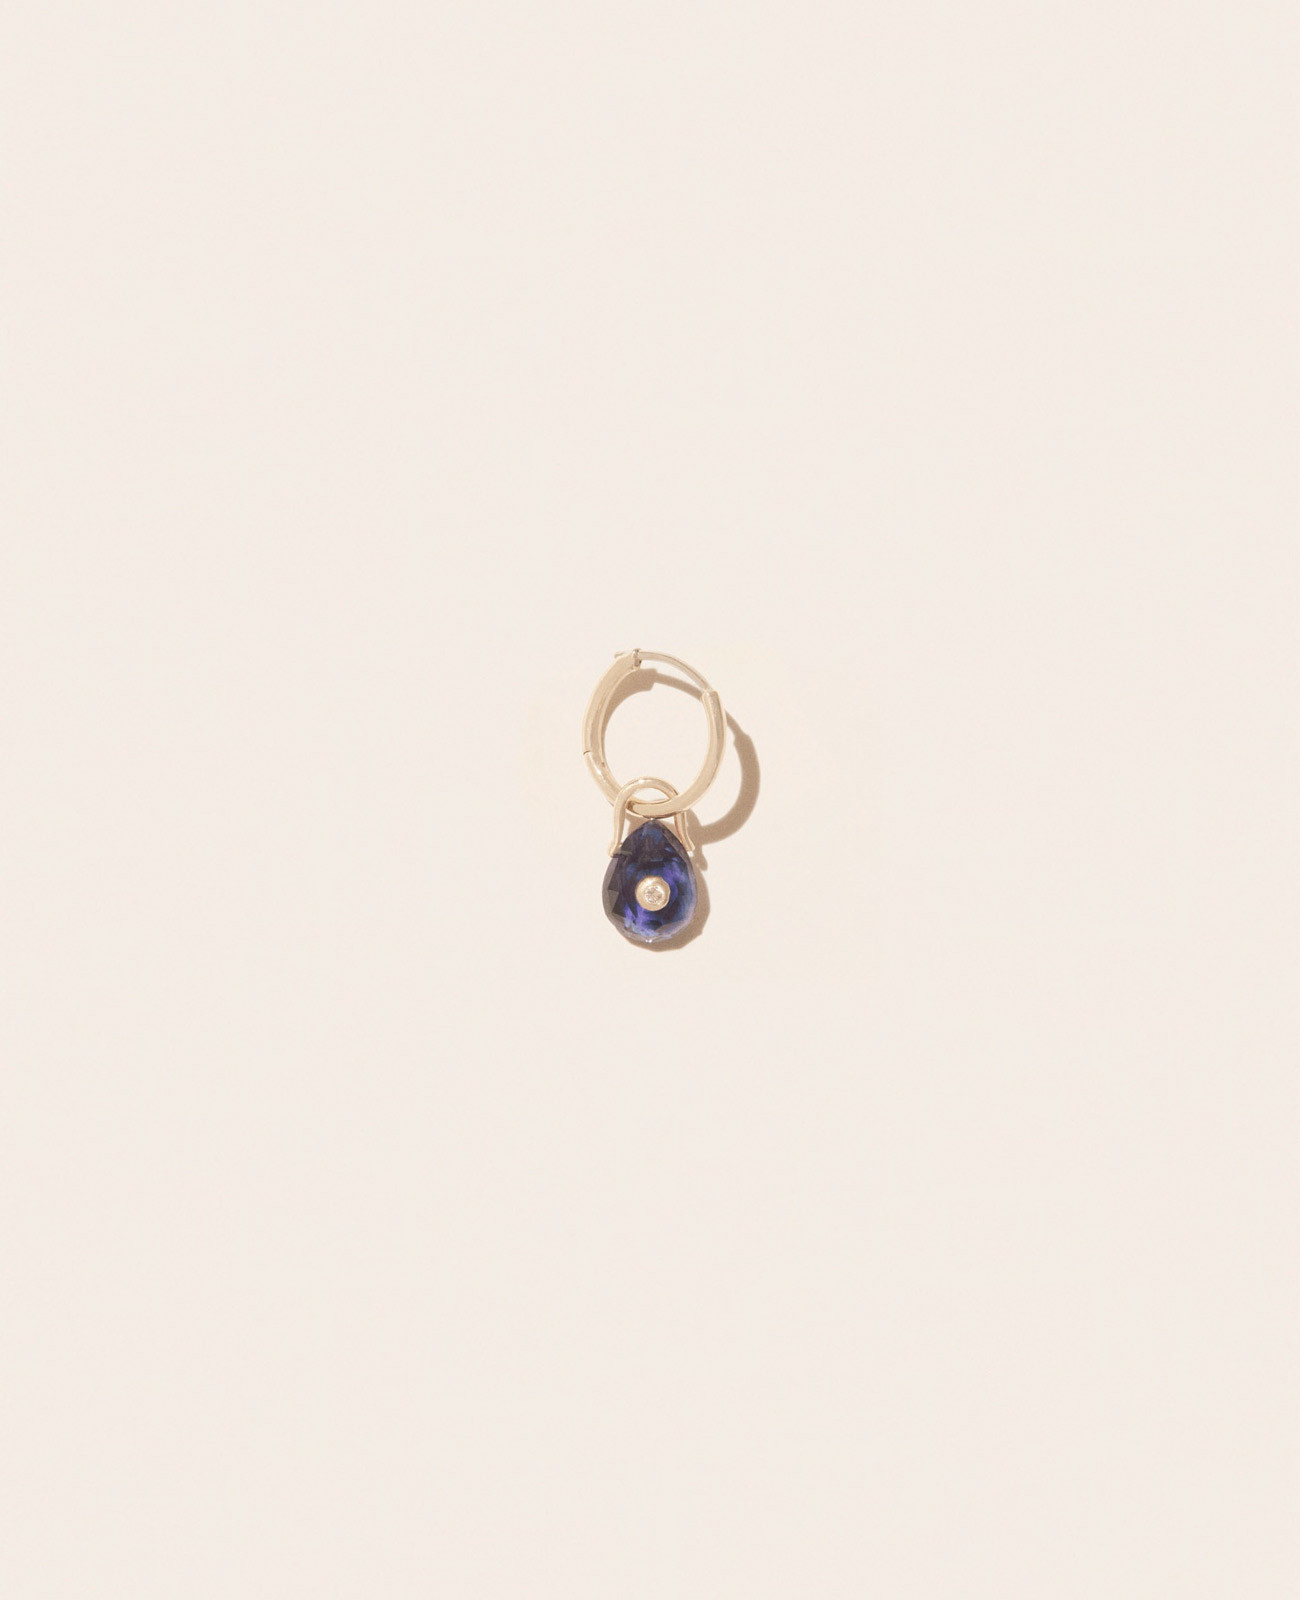 ORSO IOLITE earring pascale monvoisin jewelry paris